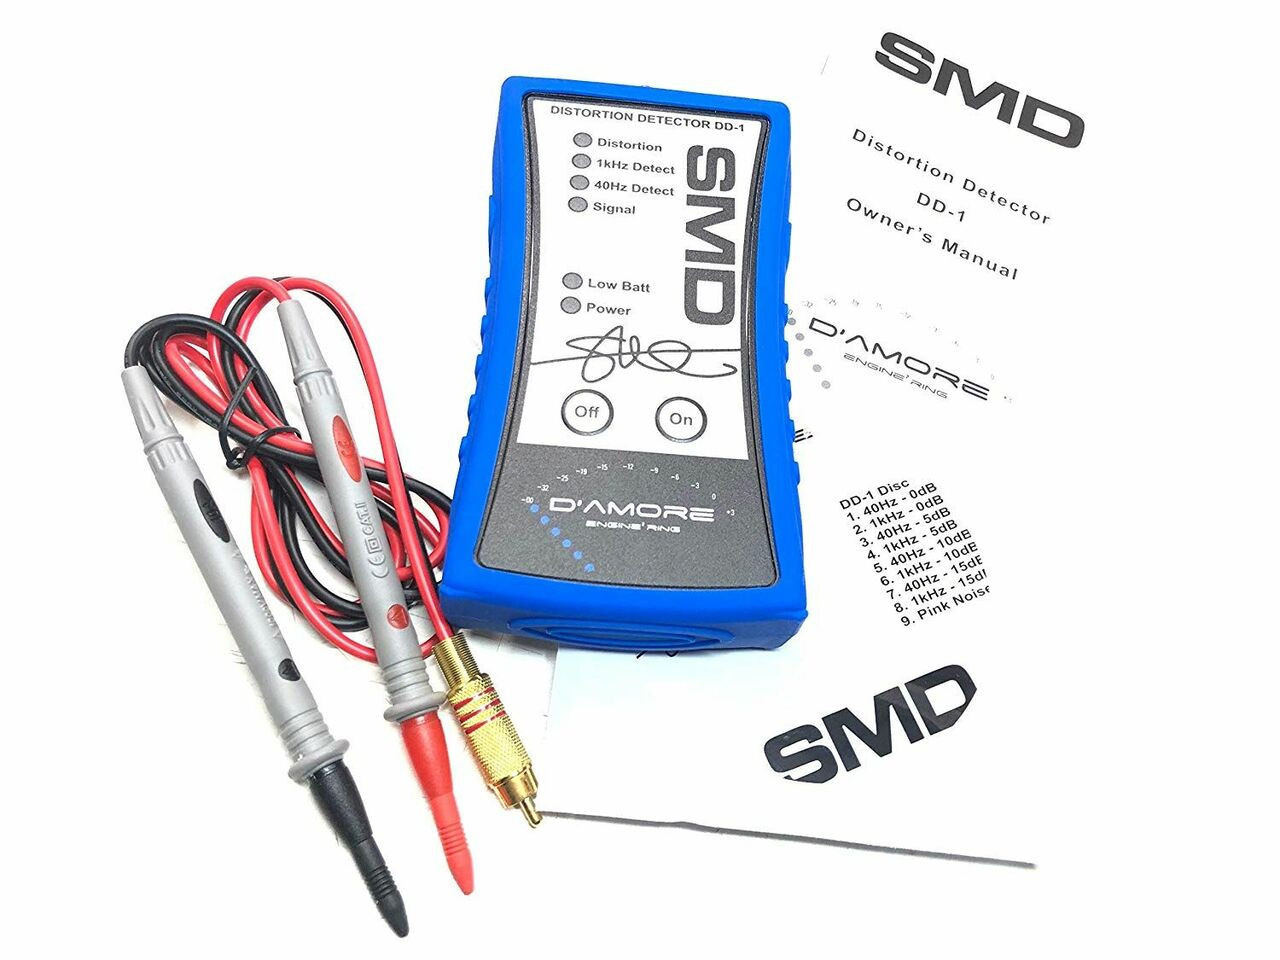 SMD Distortion Detector DD-1 - Steve Meade Designs